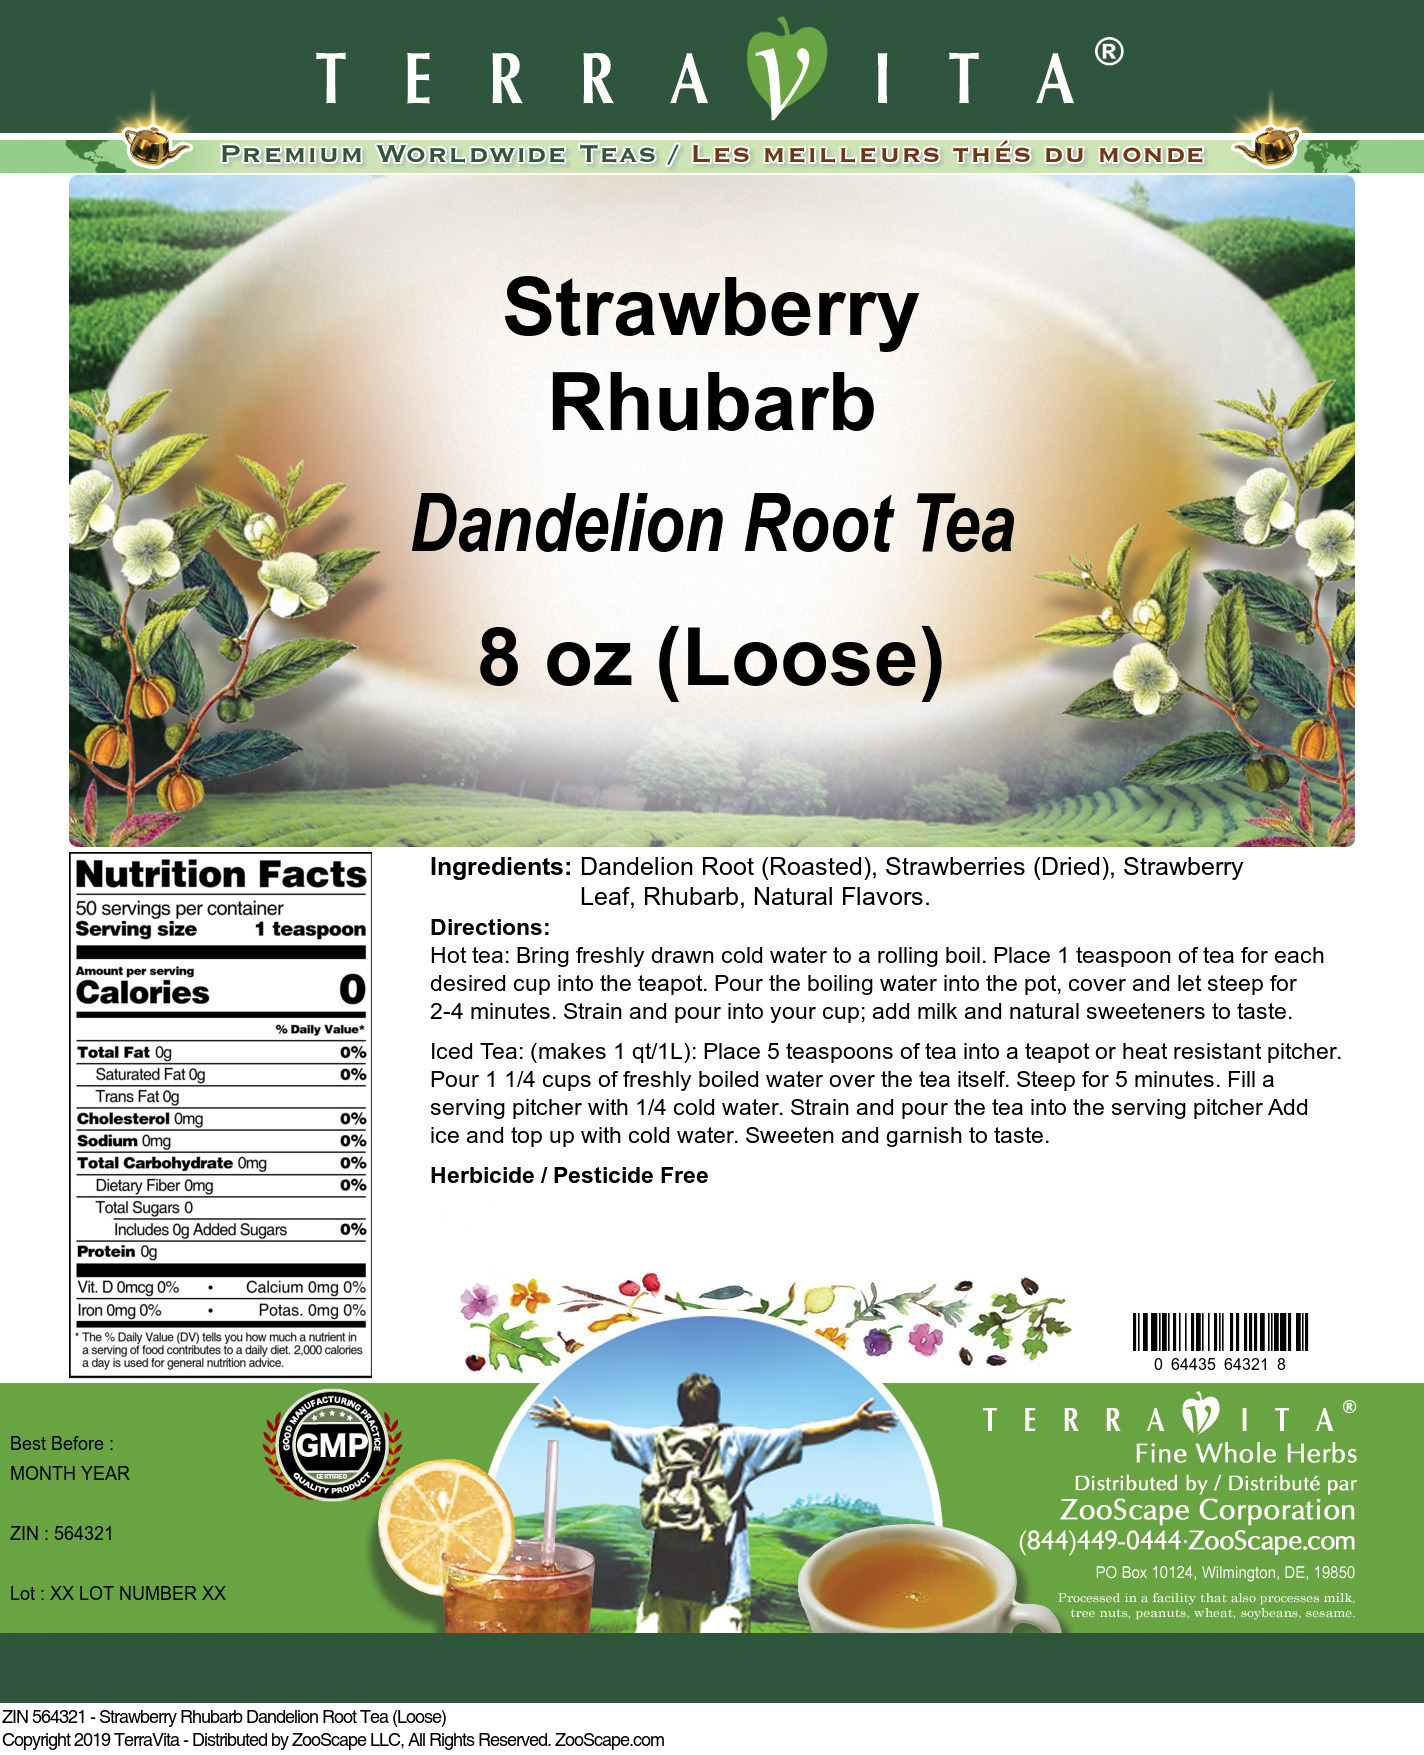 Strawberry Rhubarb Dandelion Root Tea (Loose) - Label